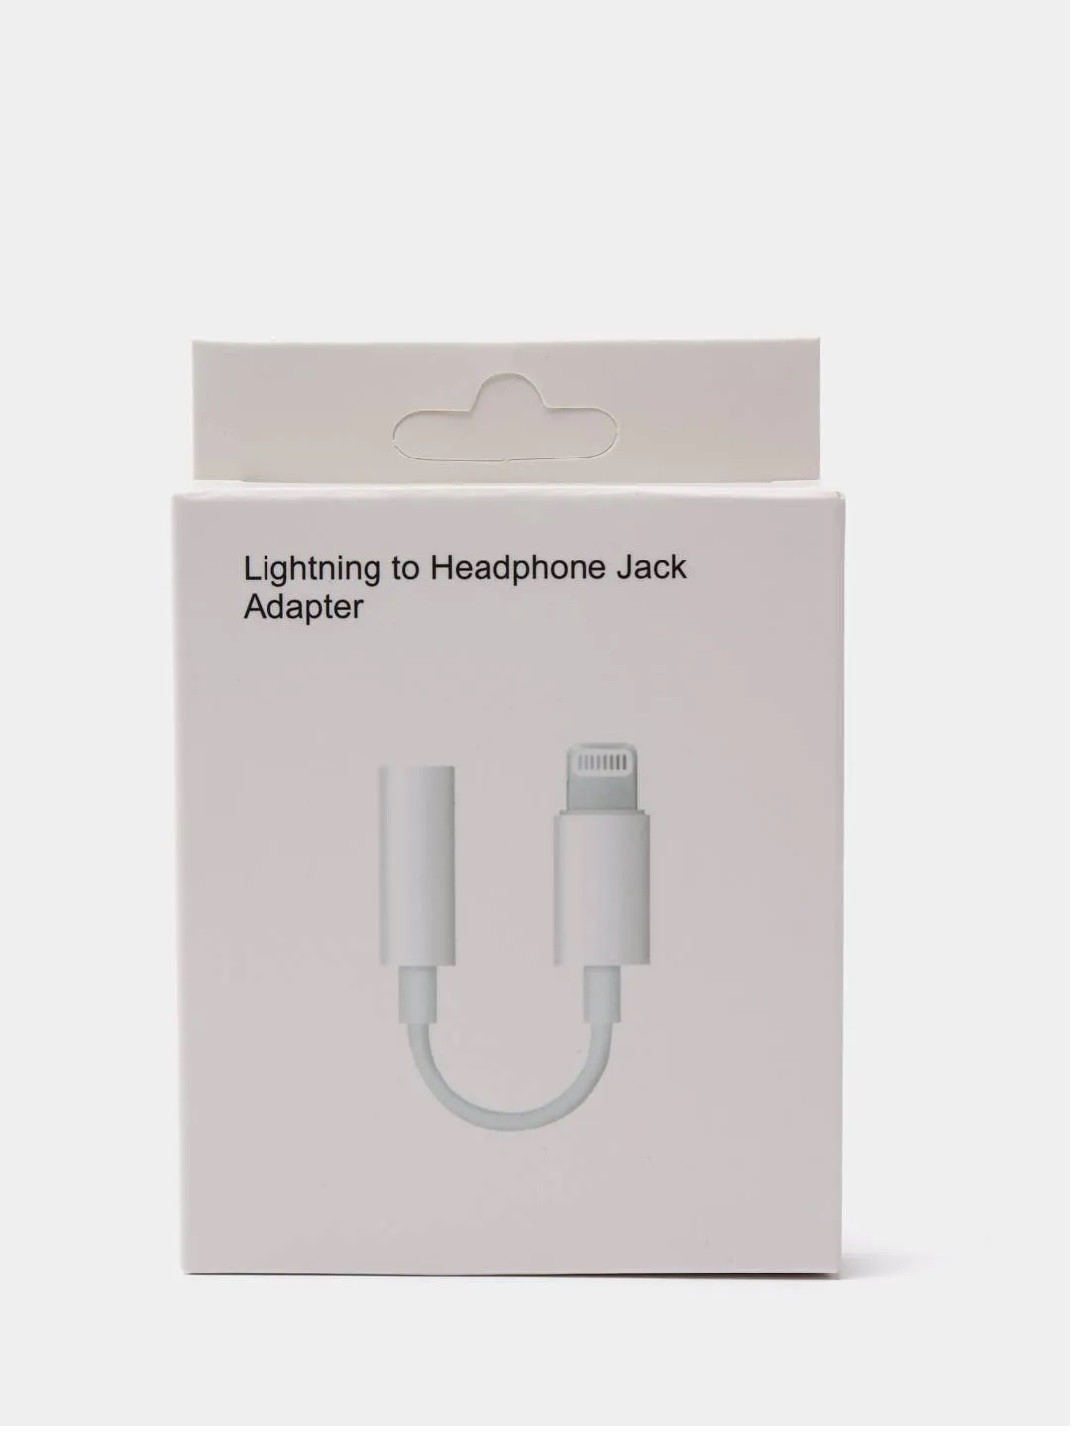 Aux аукс аудио переходник адаптер для айфон (Lightning / 3.5mm Jack для .